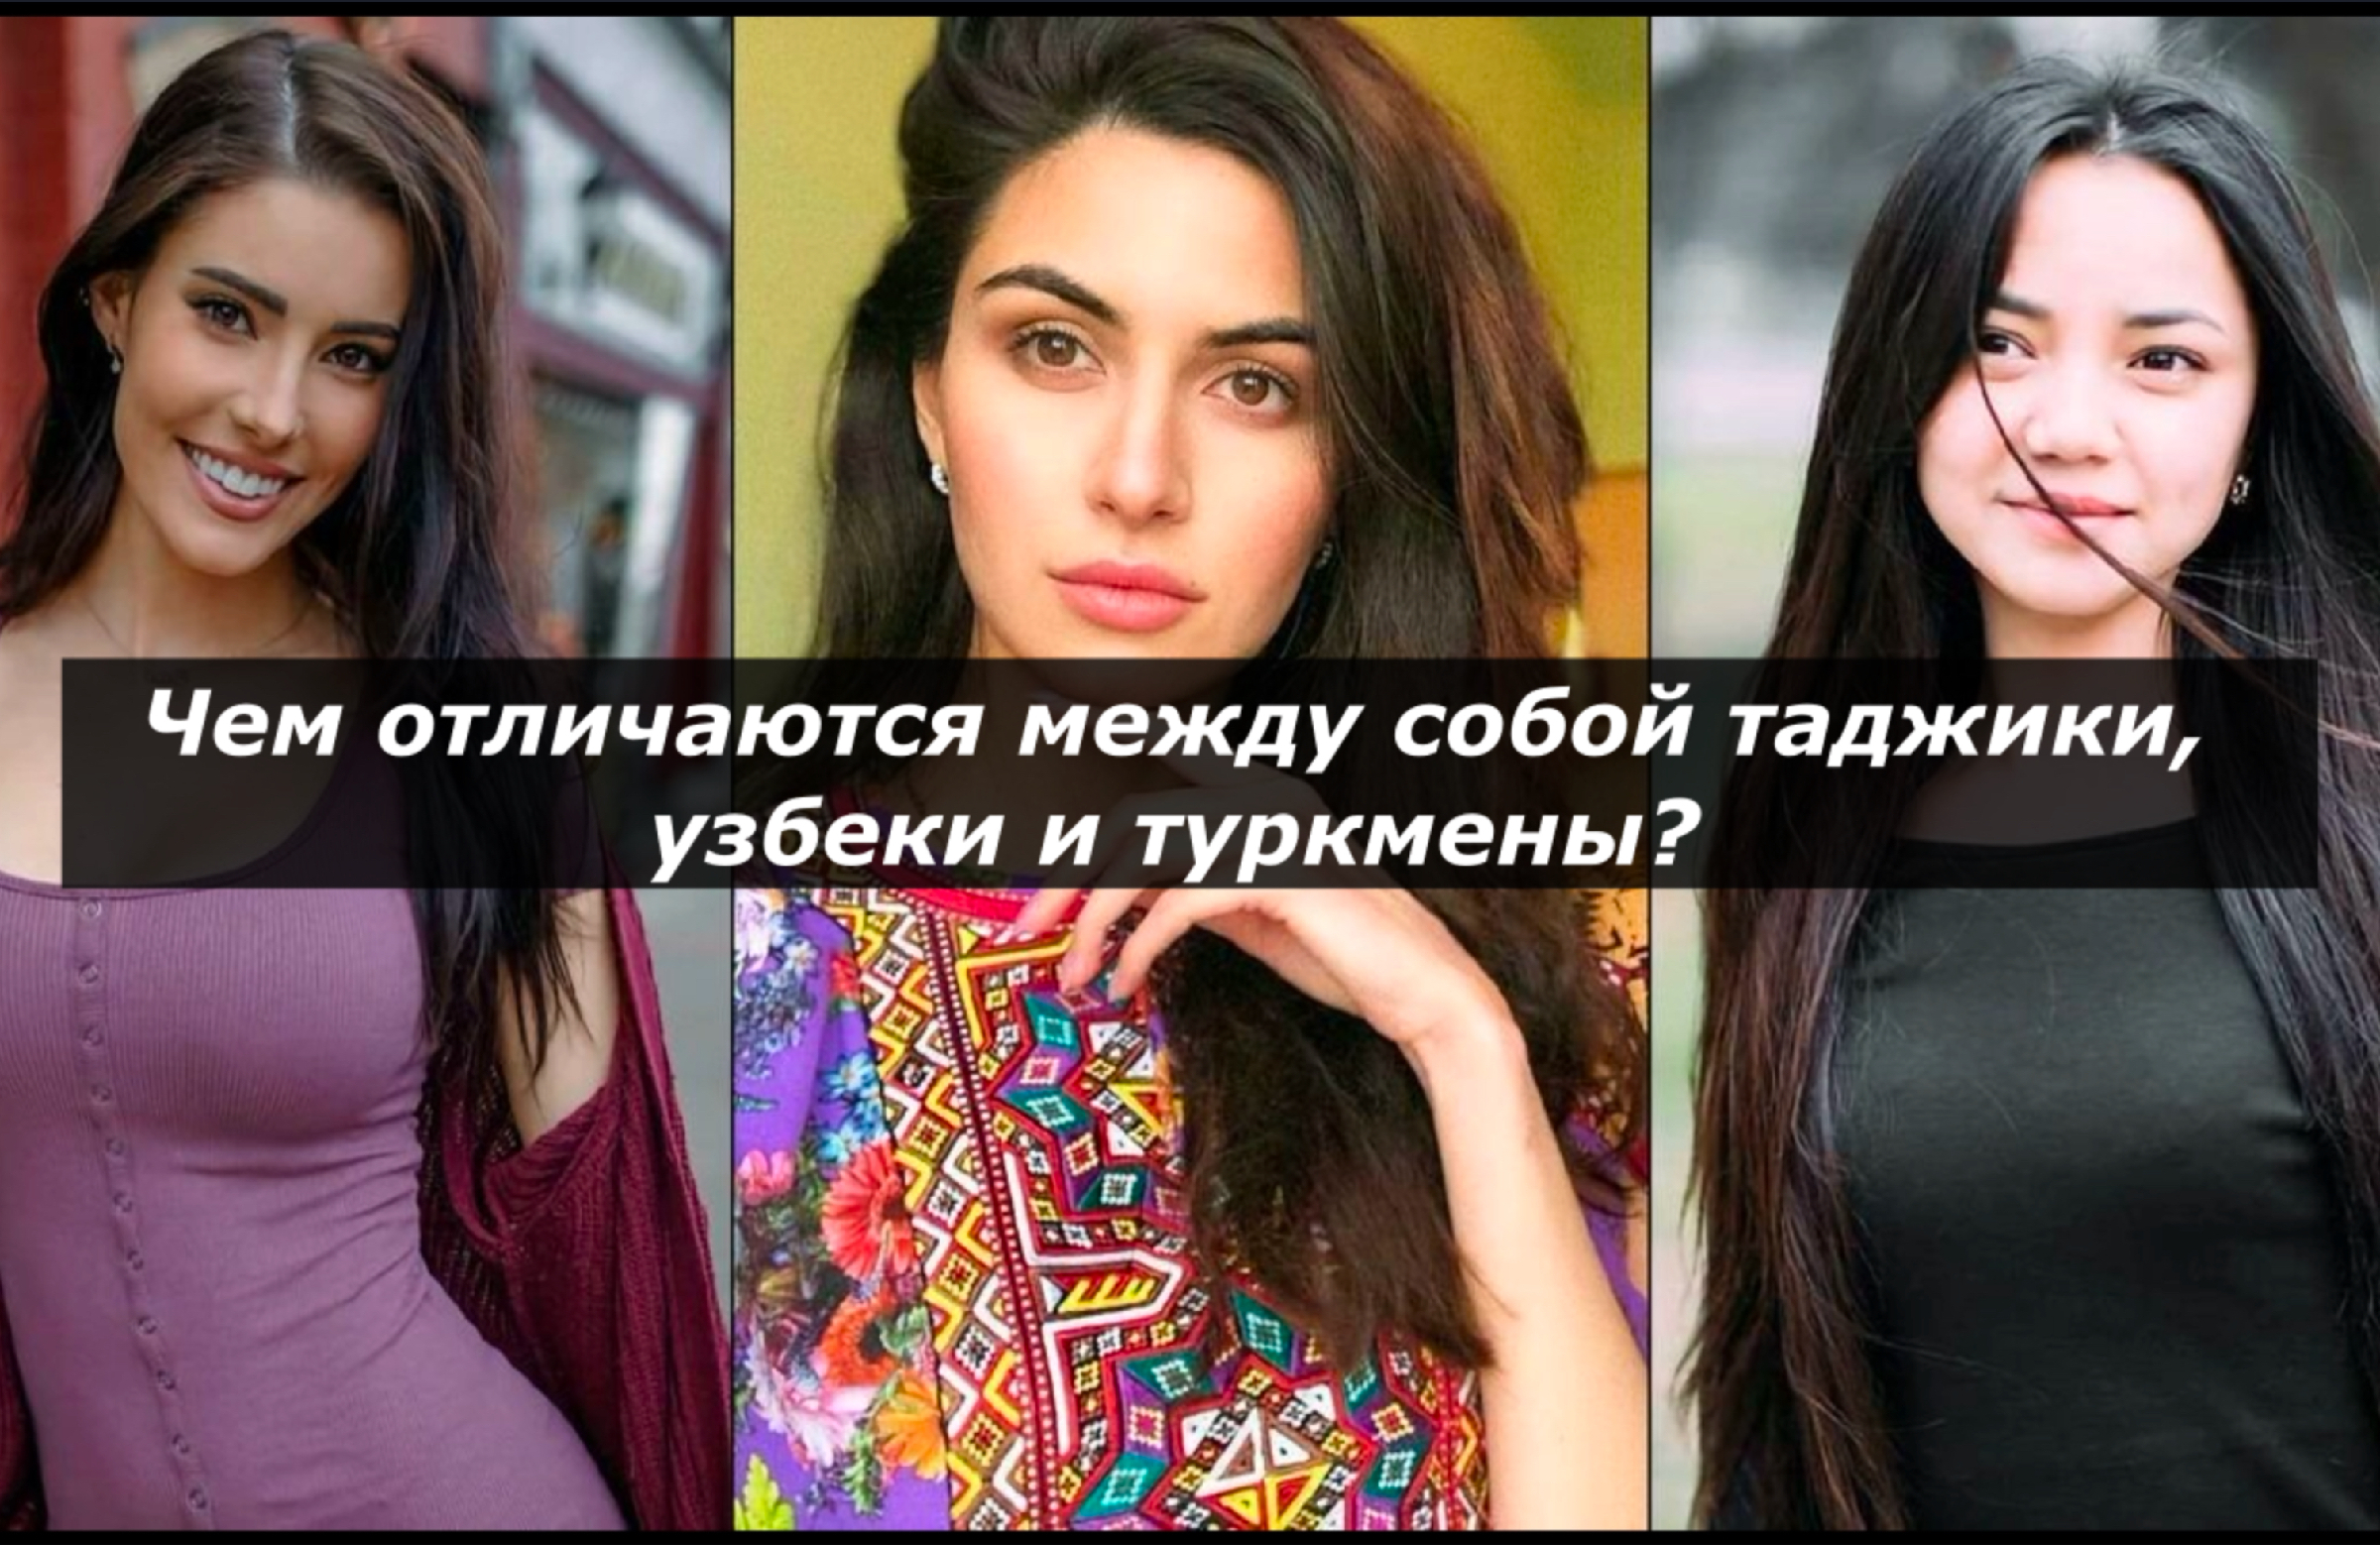 Отличие узбека от таджика. На кого похожи узбеки внешне. Таджик и узбек отличия внешне фото. Как отличить таджика от узбека по внешности.